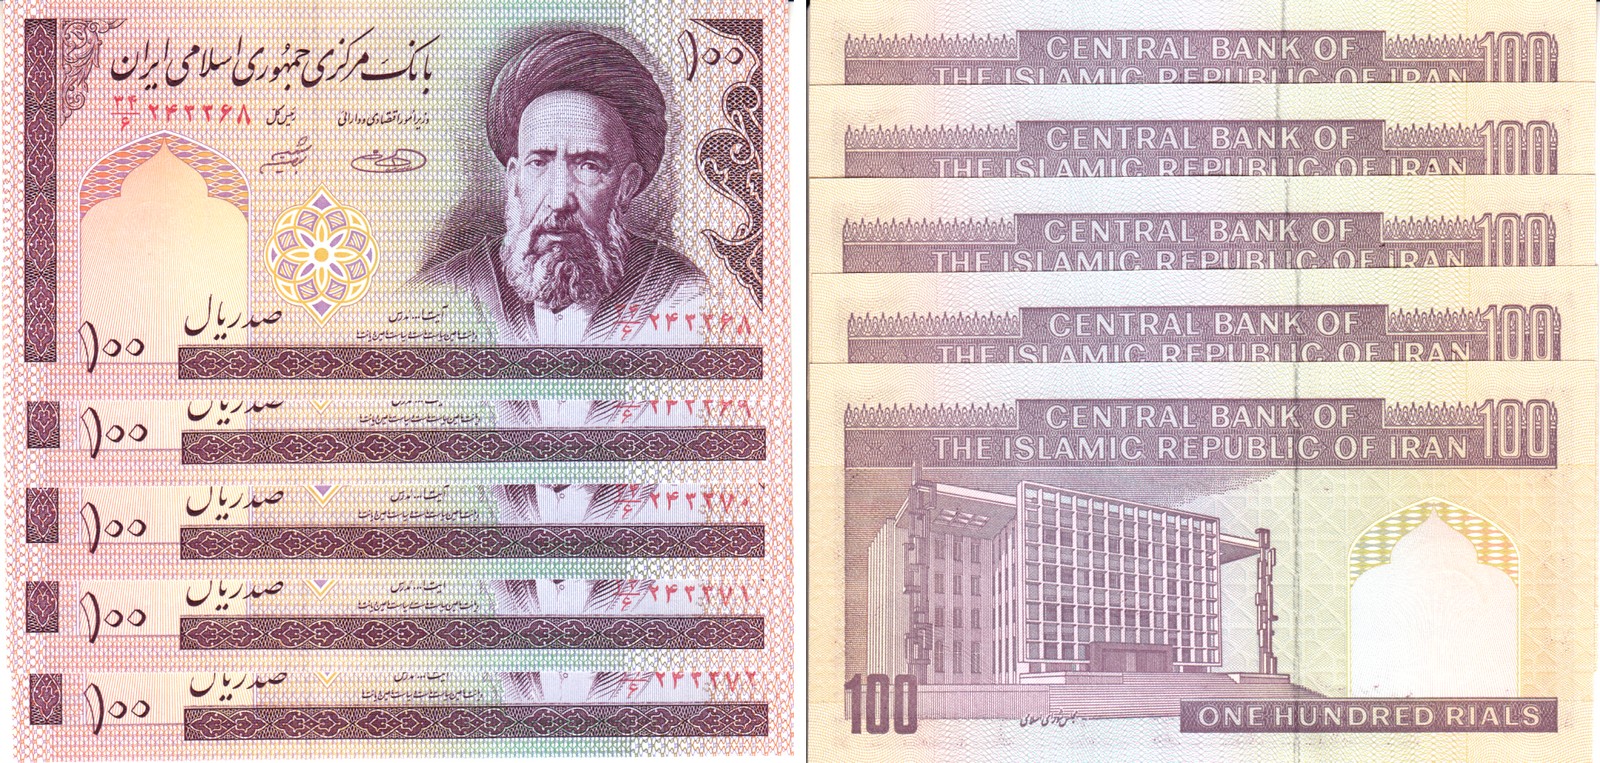 À Vendre - Lot 5 Billets Iran Série 100 Rials 1985.jpg